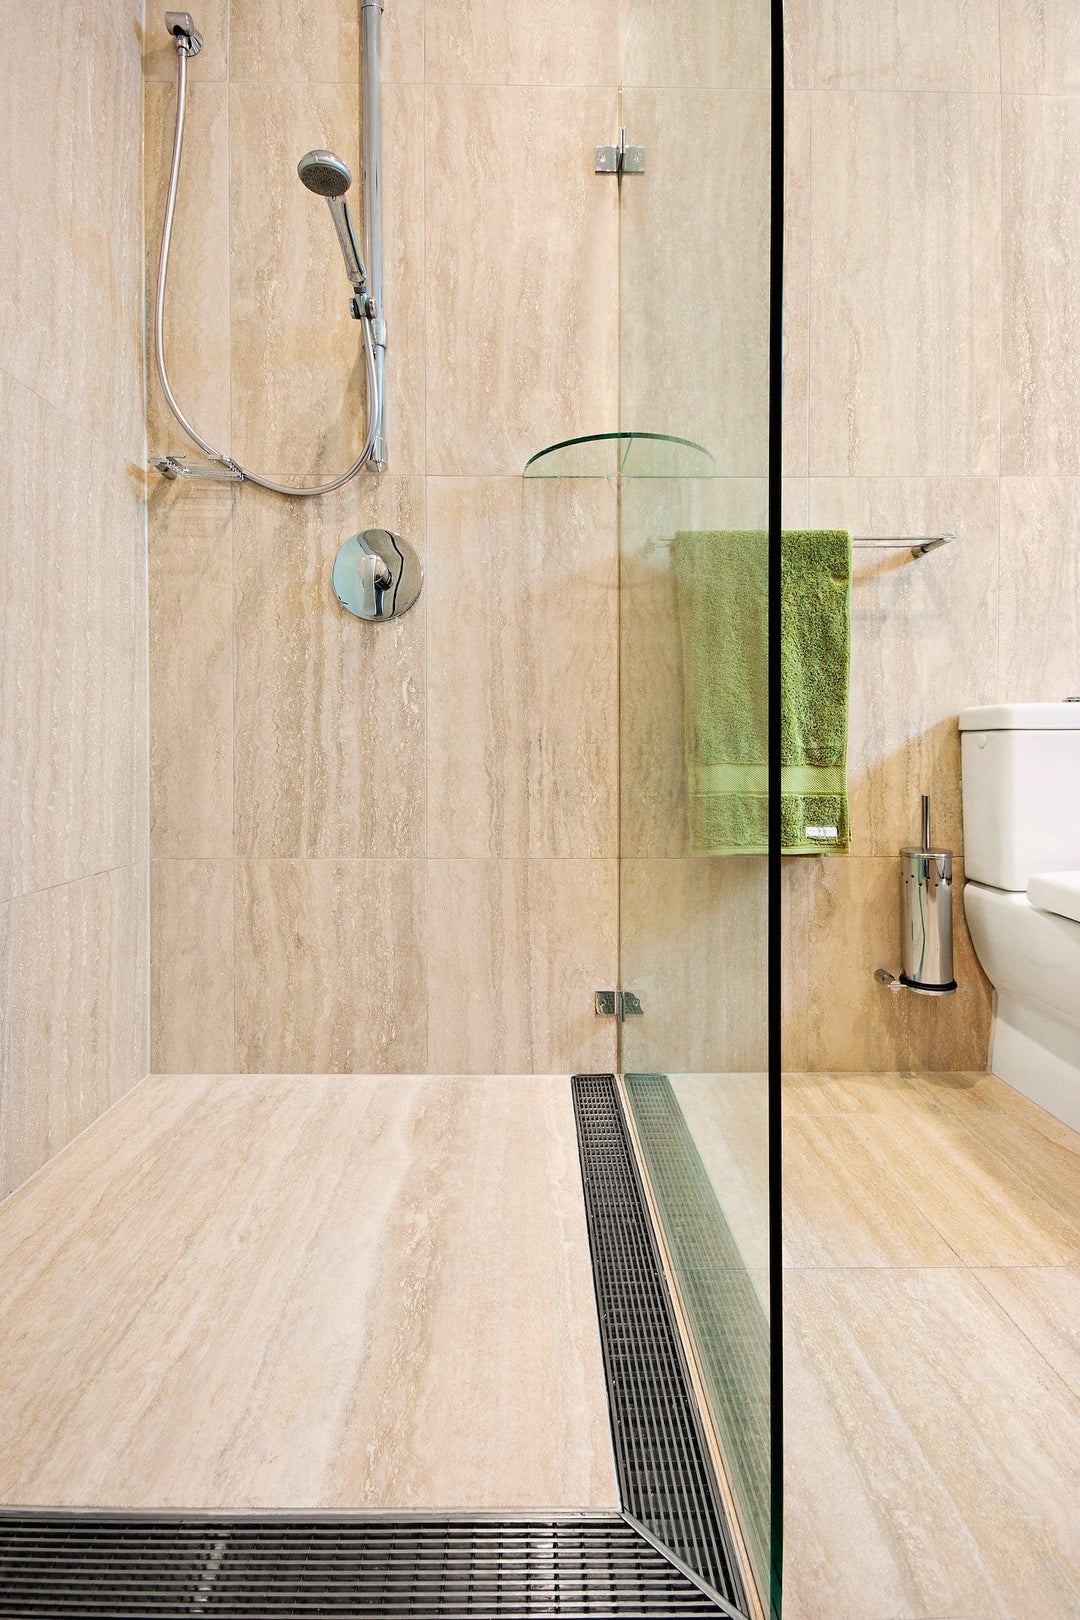 Shower Grates & Drains for a Stylish Bathroom